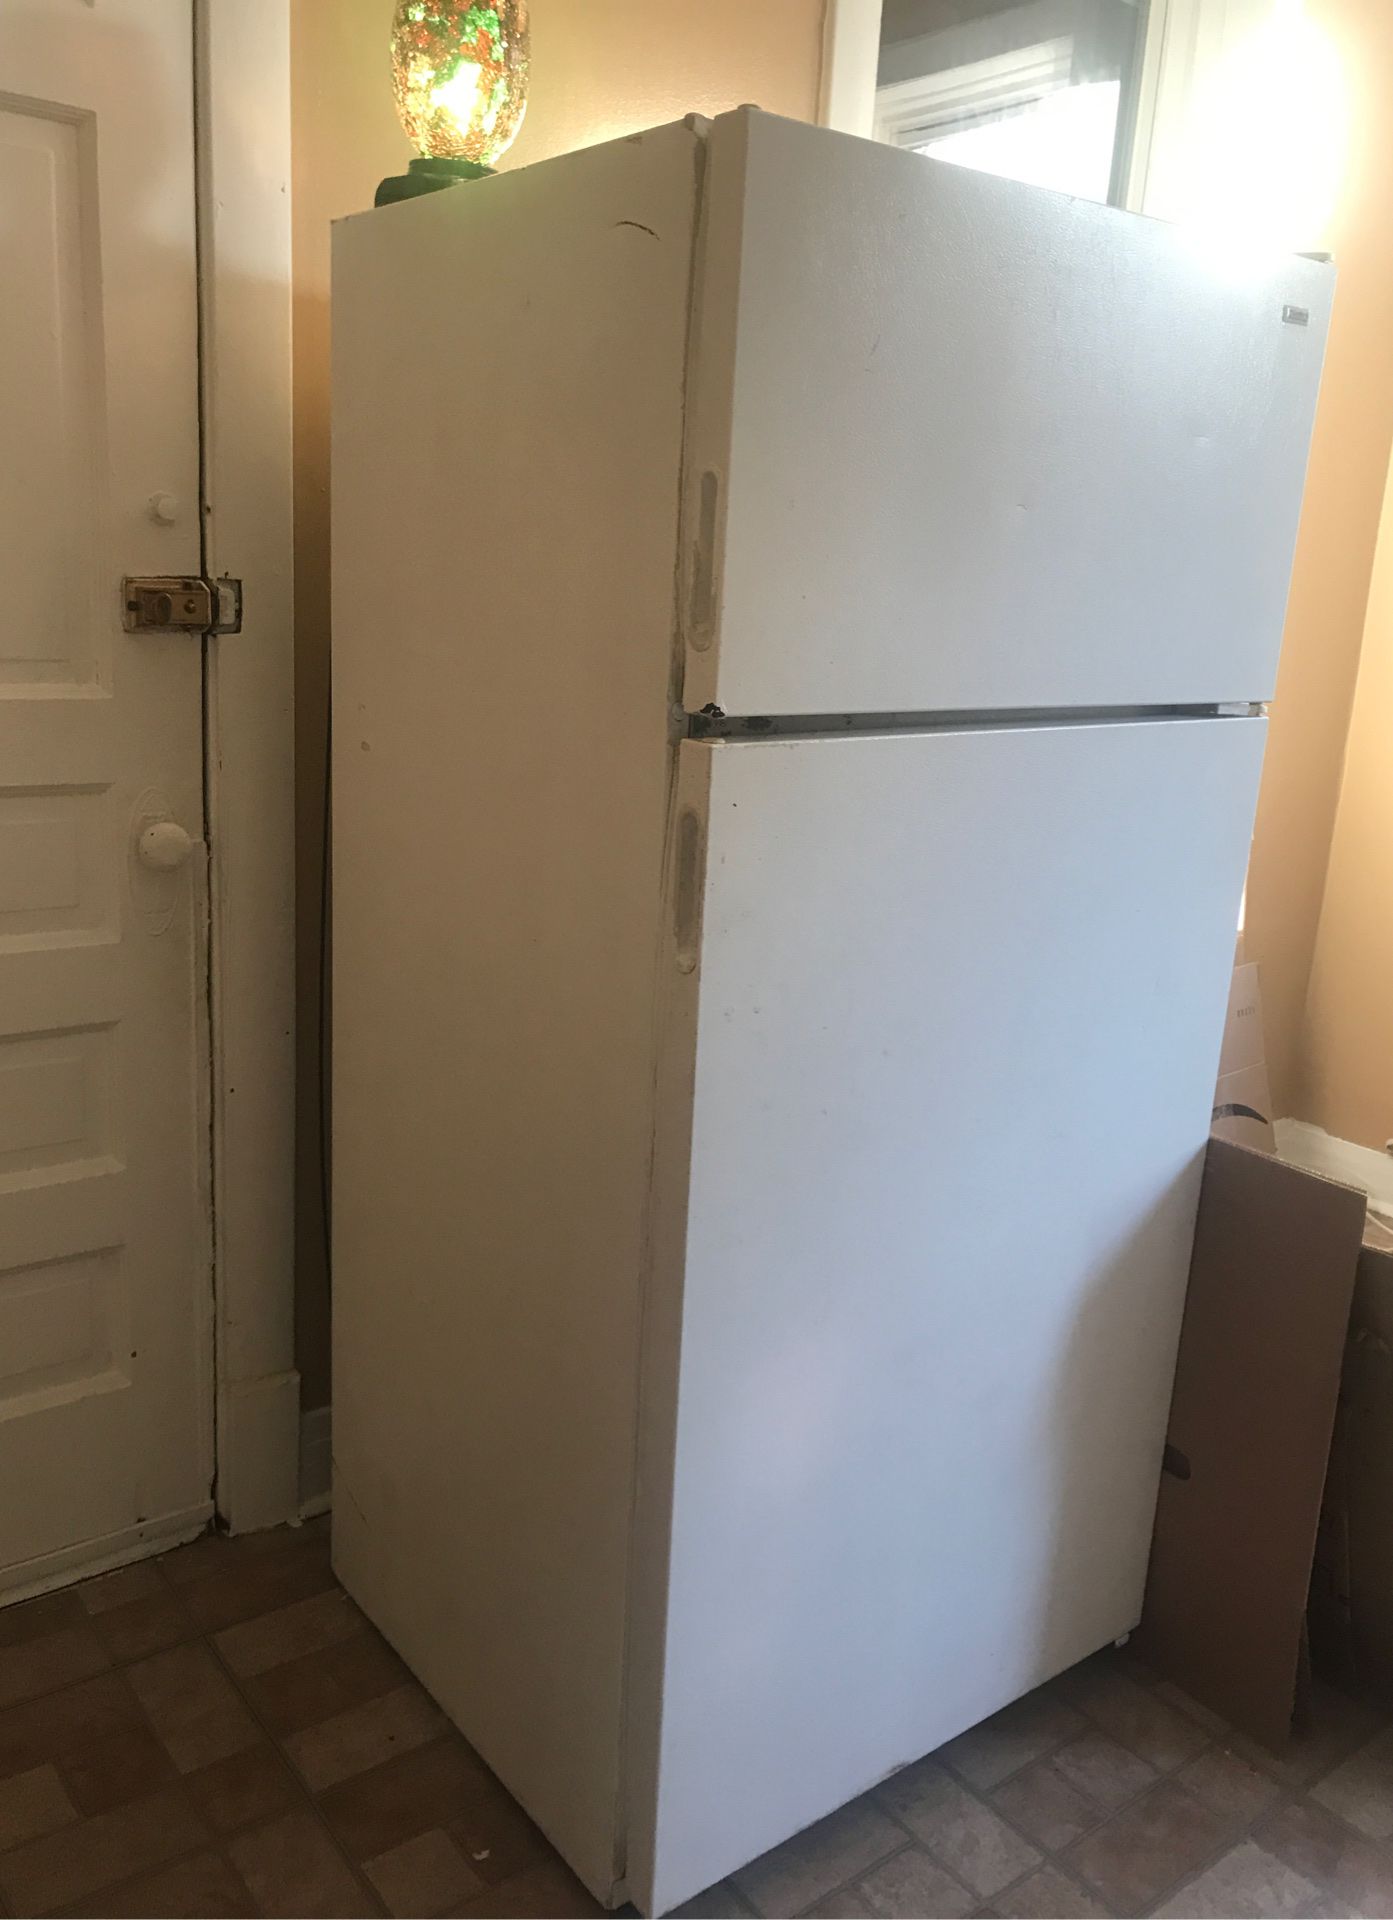 Old refrigerator (kenmore)